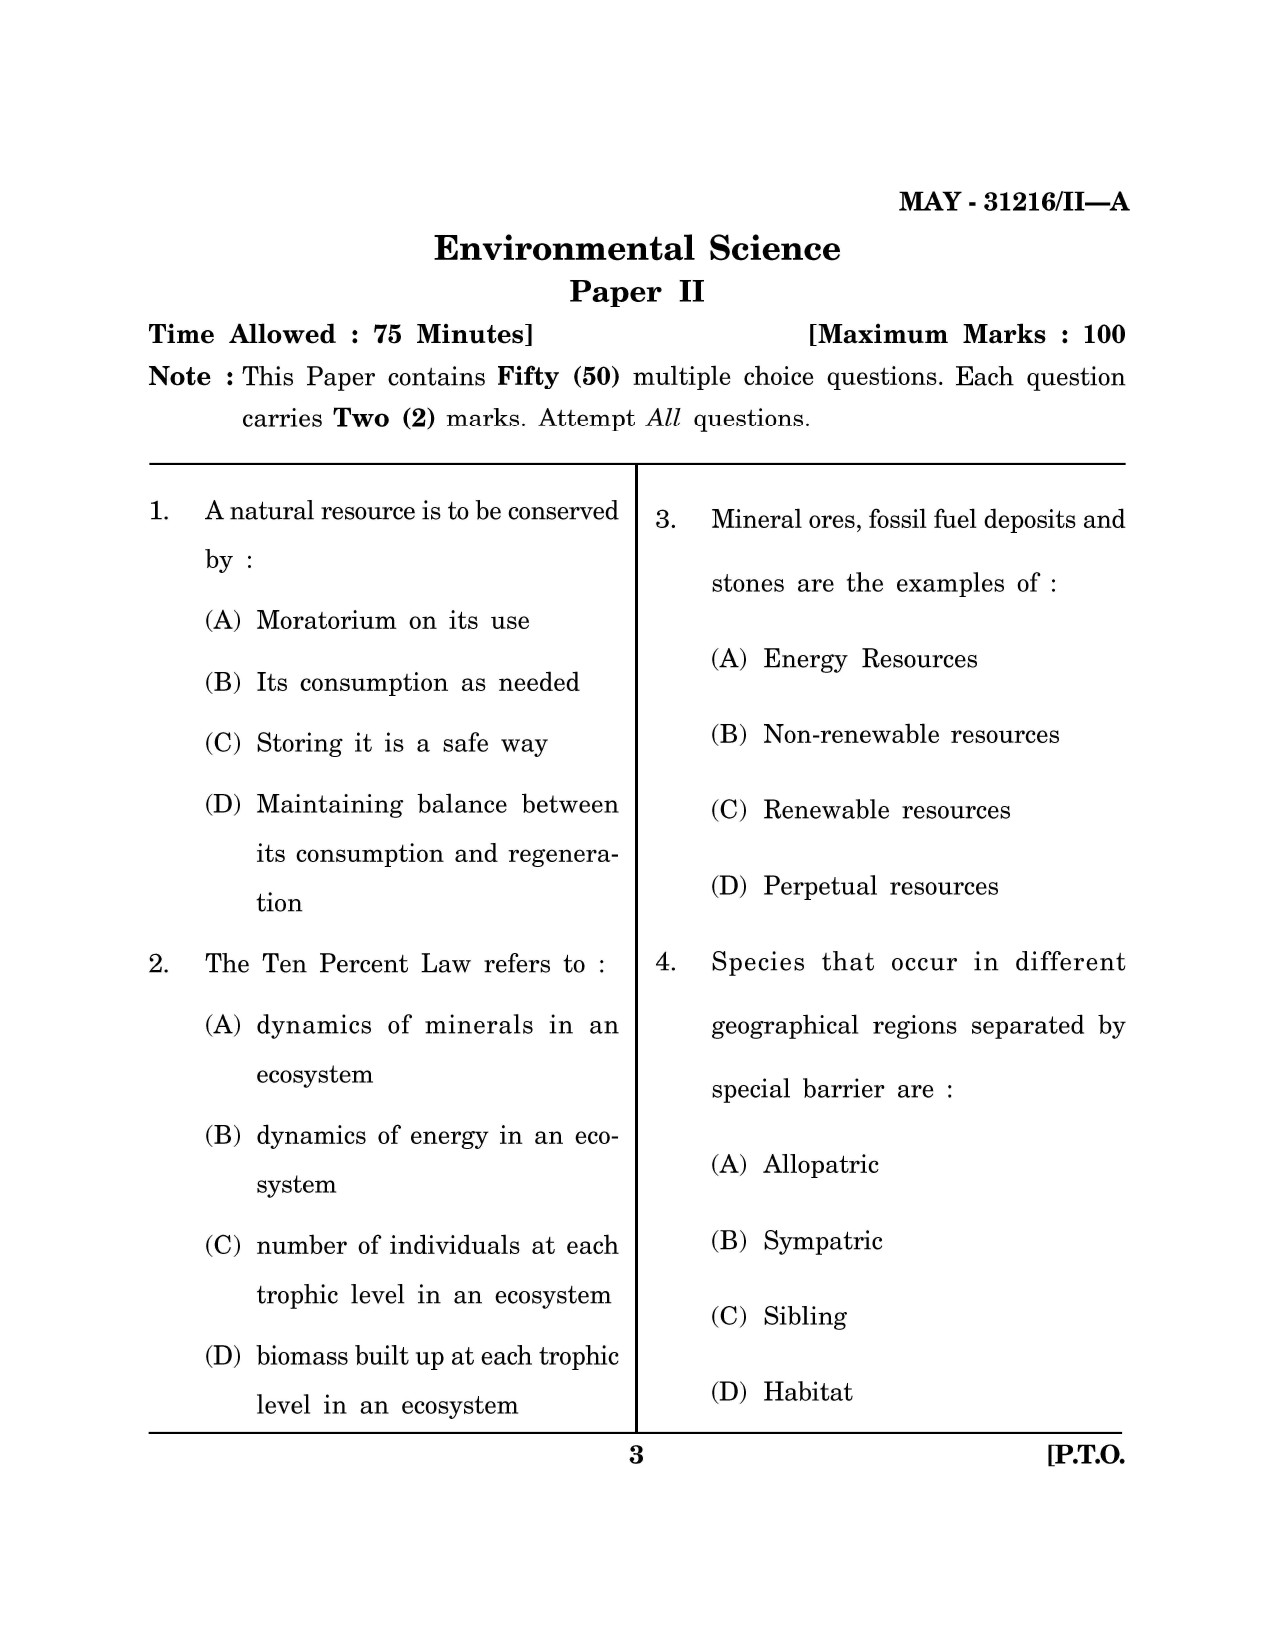 Maharashtra SET Environmental Sciences Question Paper II May 2016 2